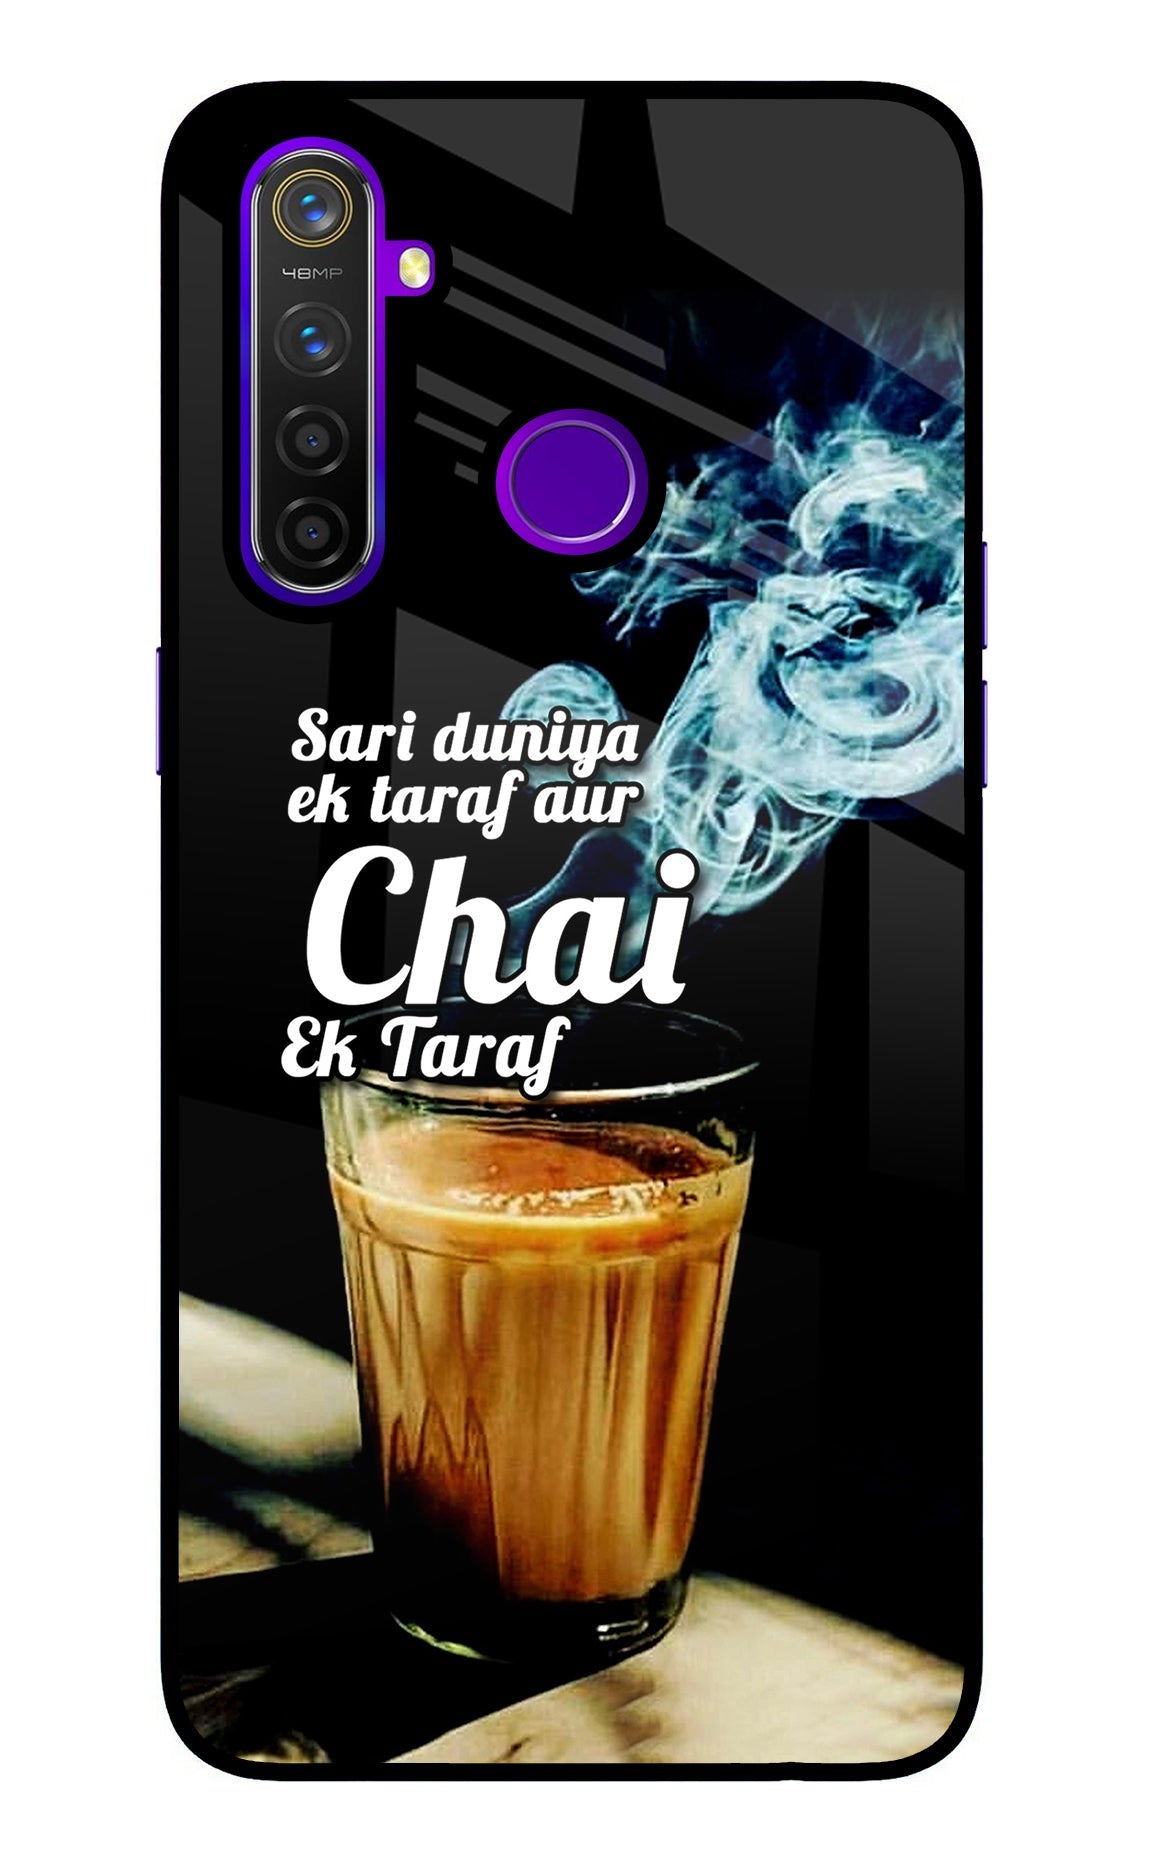 Chai Ek Taraf Quote Realme 5 Pro Glass Case